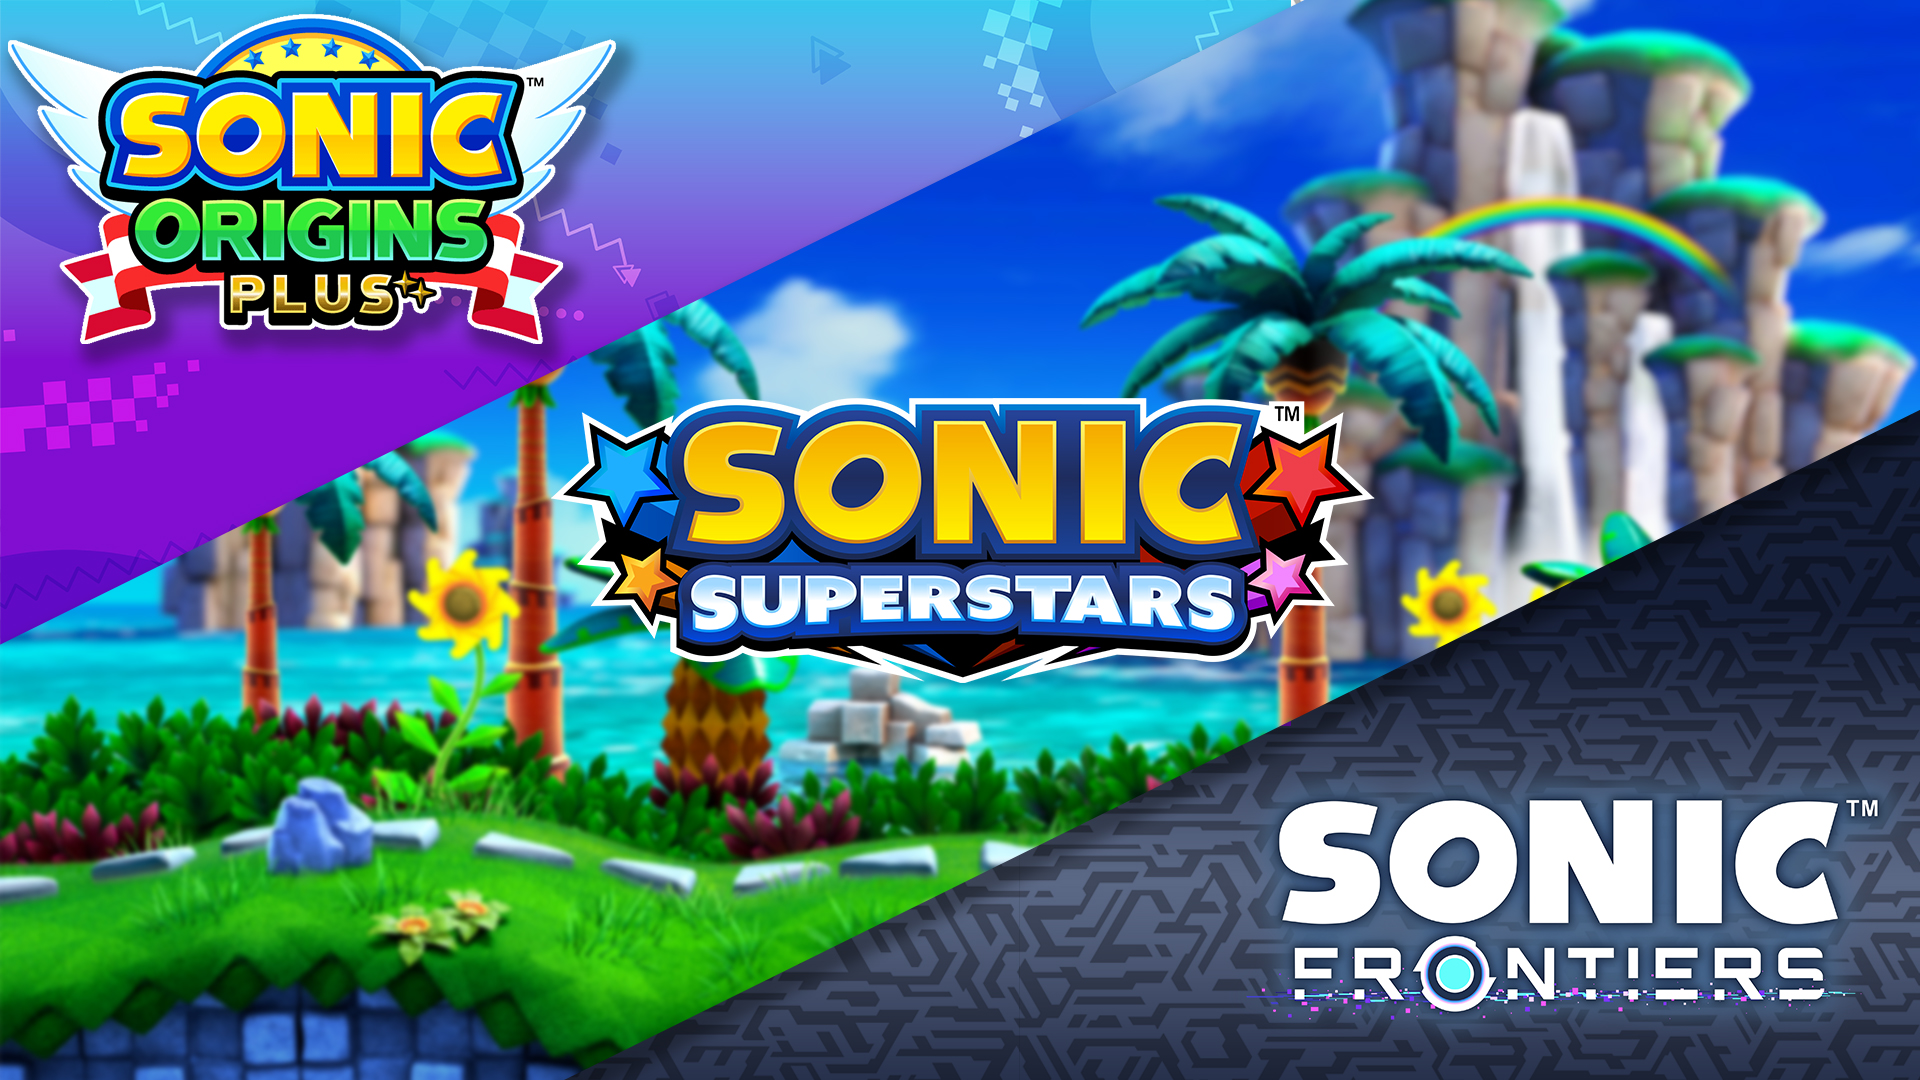 Sonic Updates Hero Image